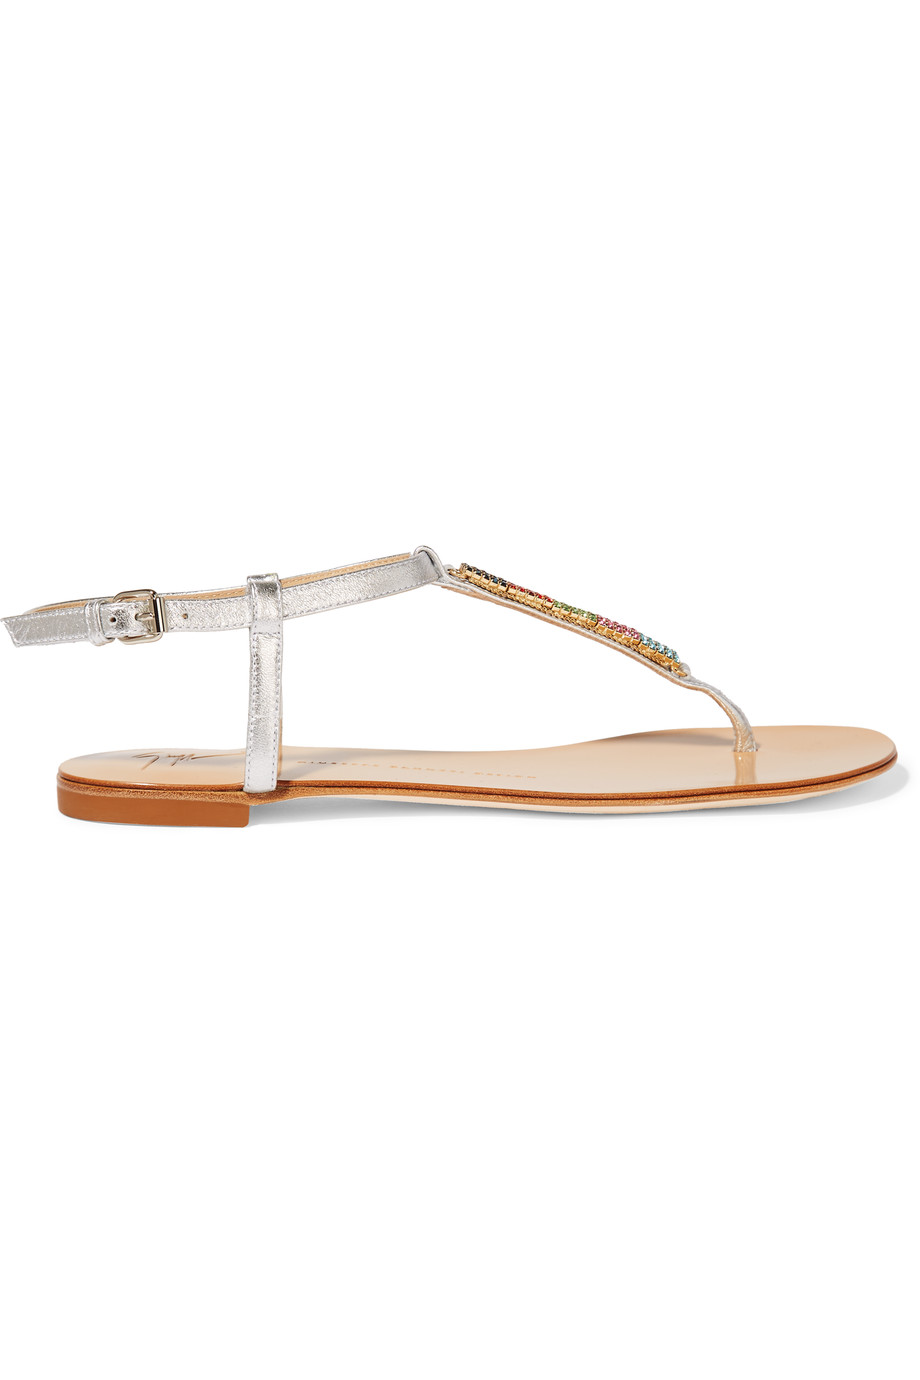 Giuseppe Zanotti Embellished Metallic Leather Sandals | ModeSens